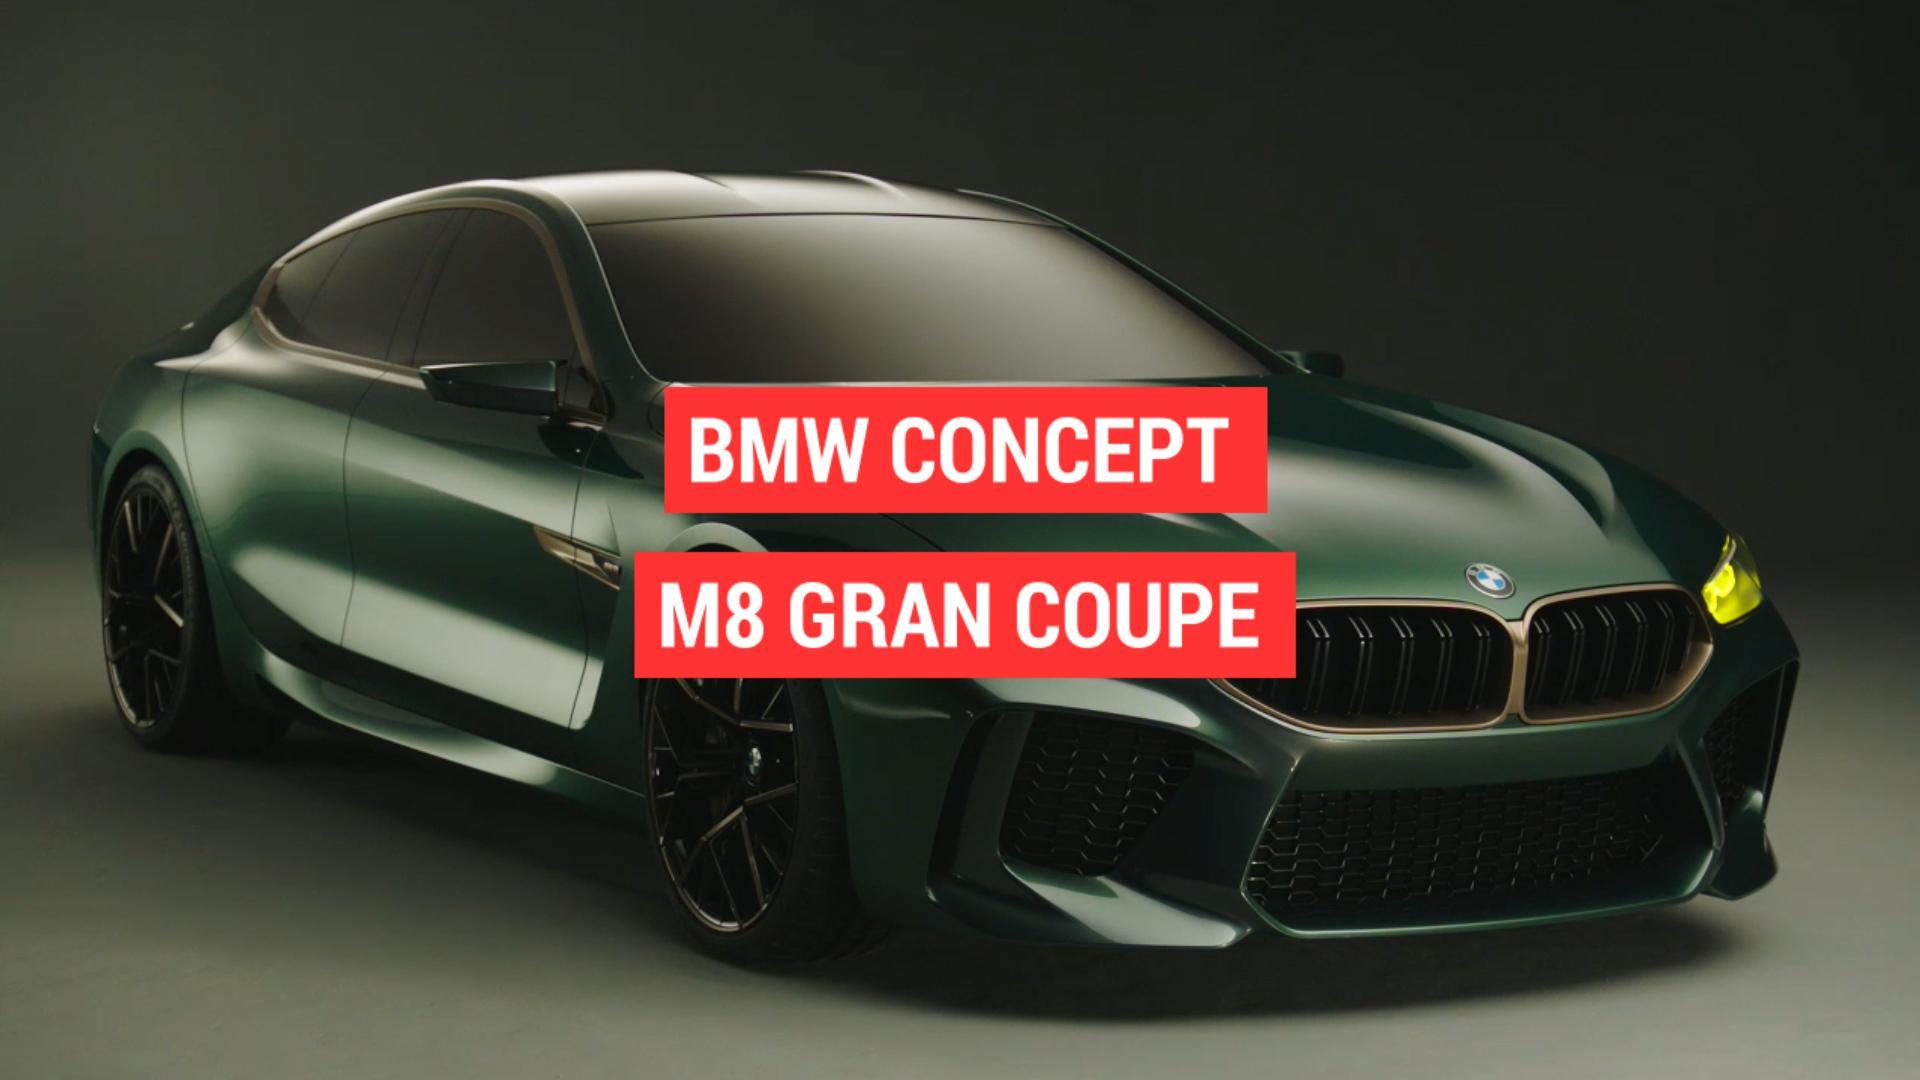 New BMW iX3 crossover EV to debut next week in Beijing